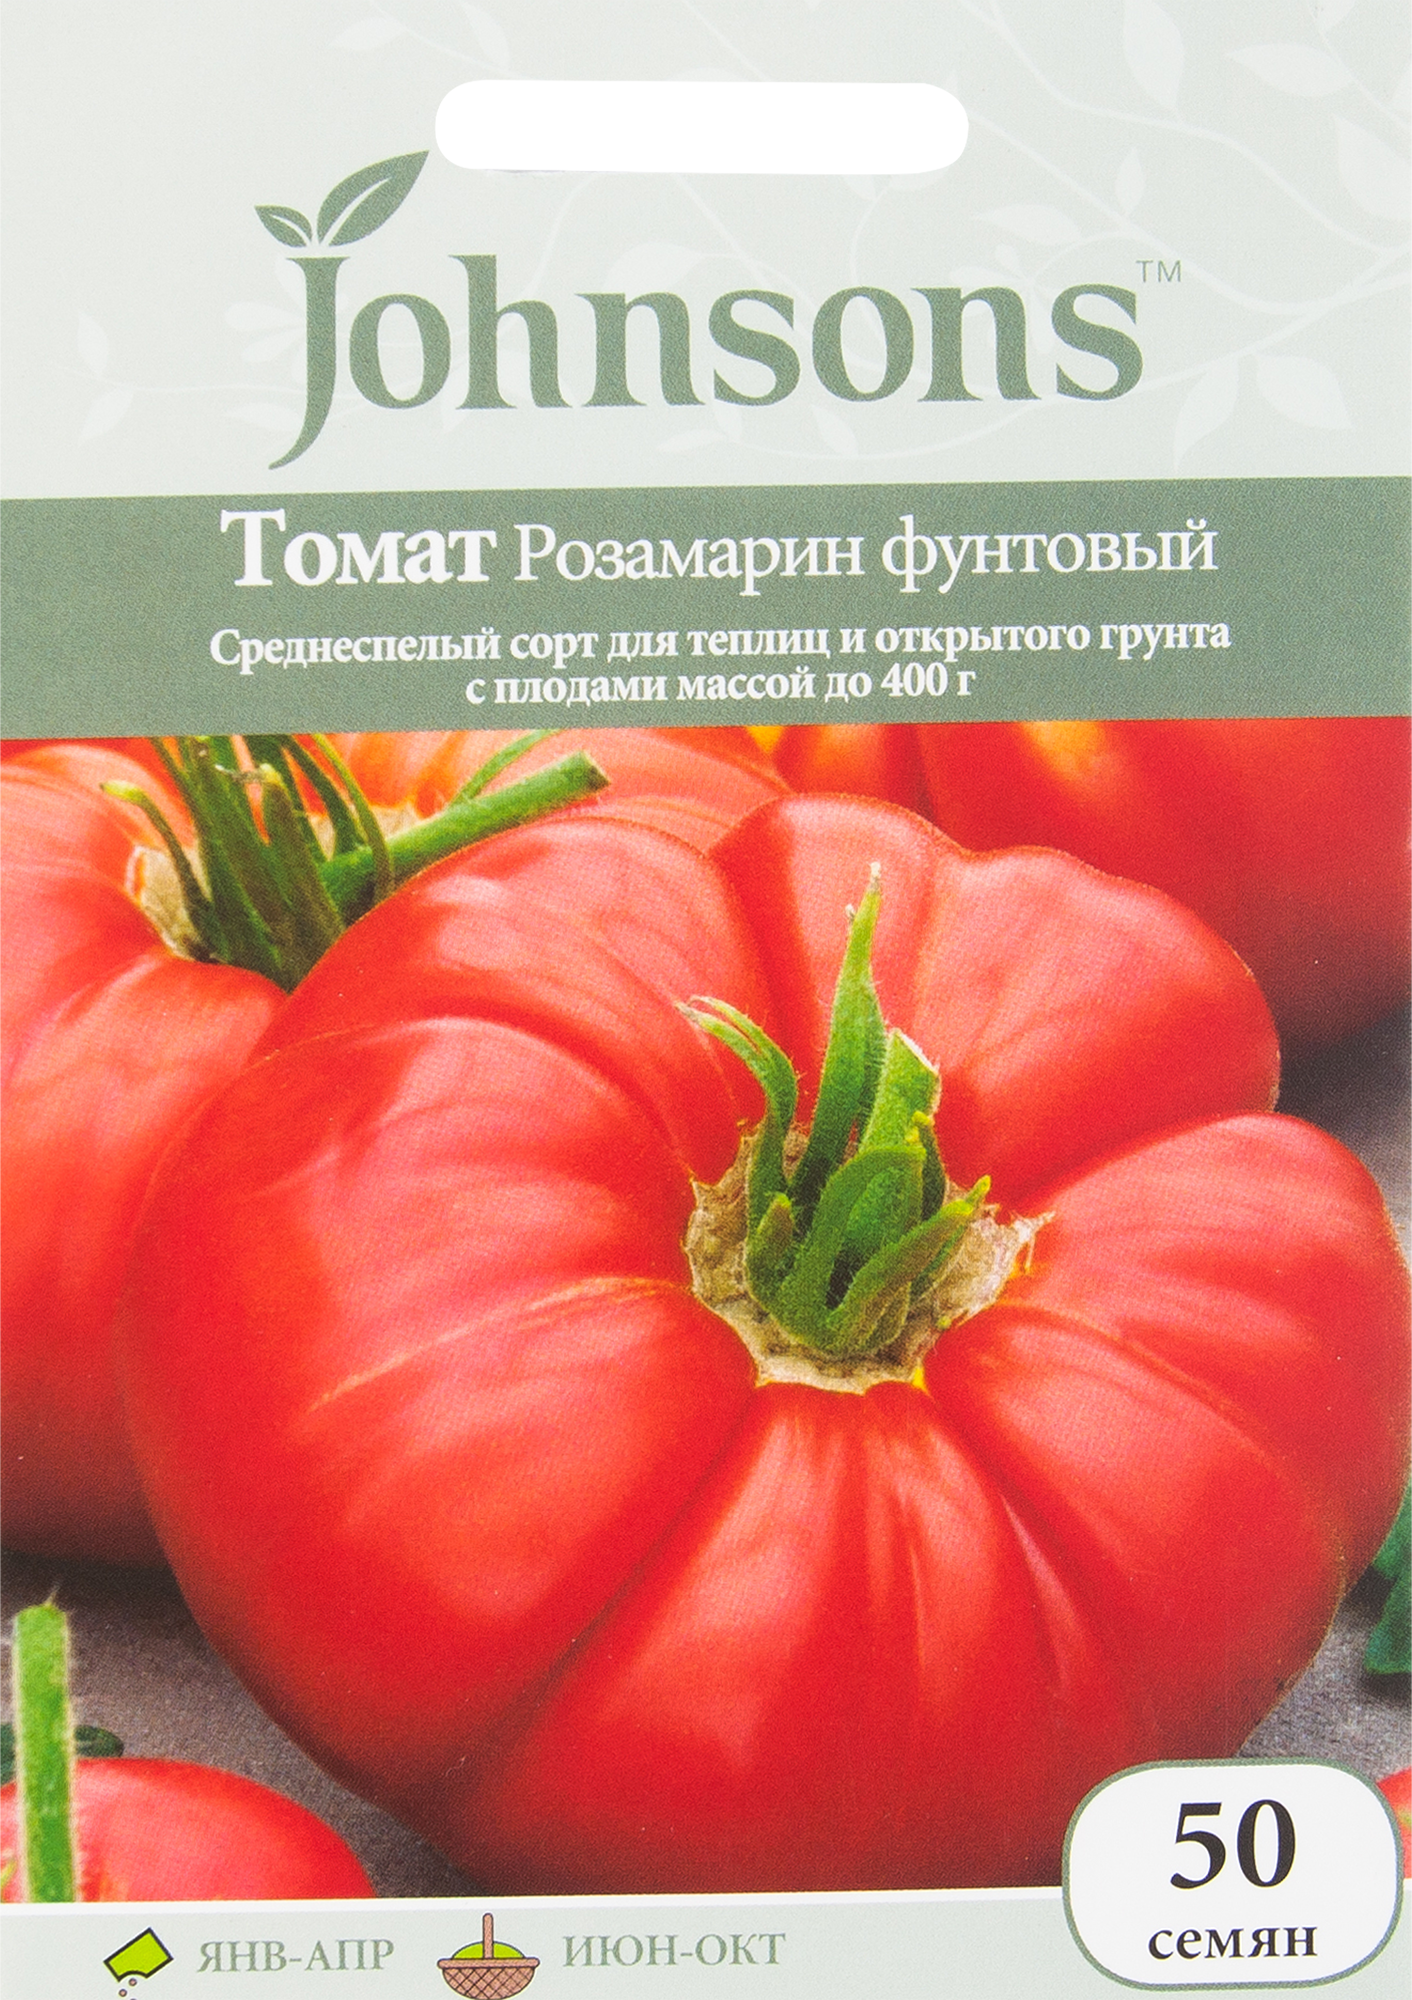 Мерлен семена томатов. Томат Джонсон розмарин фунтовый. Помидоры розмарин фунтовый. Семена томат Розамарин фунтовый. Семена томат Розамарин f1.